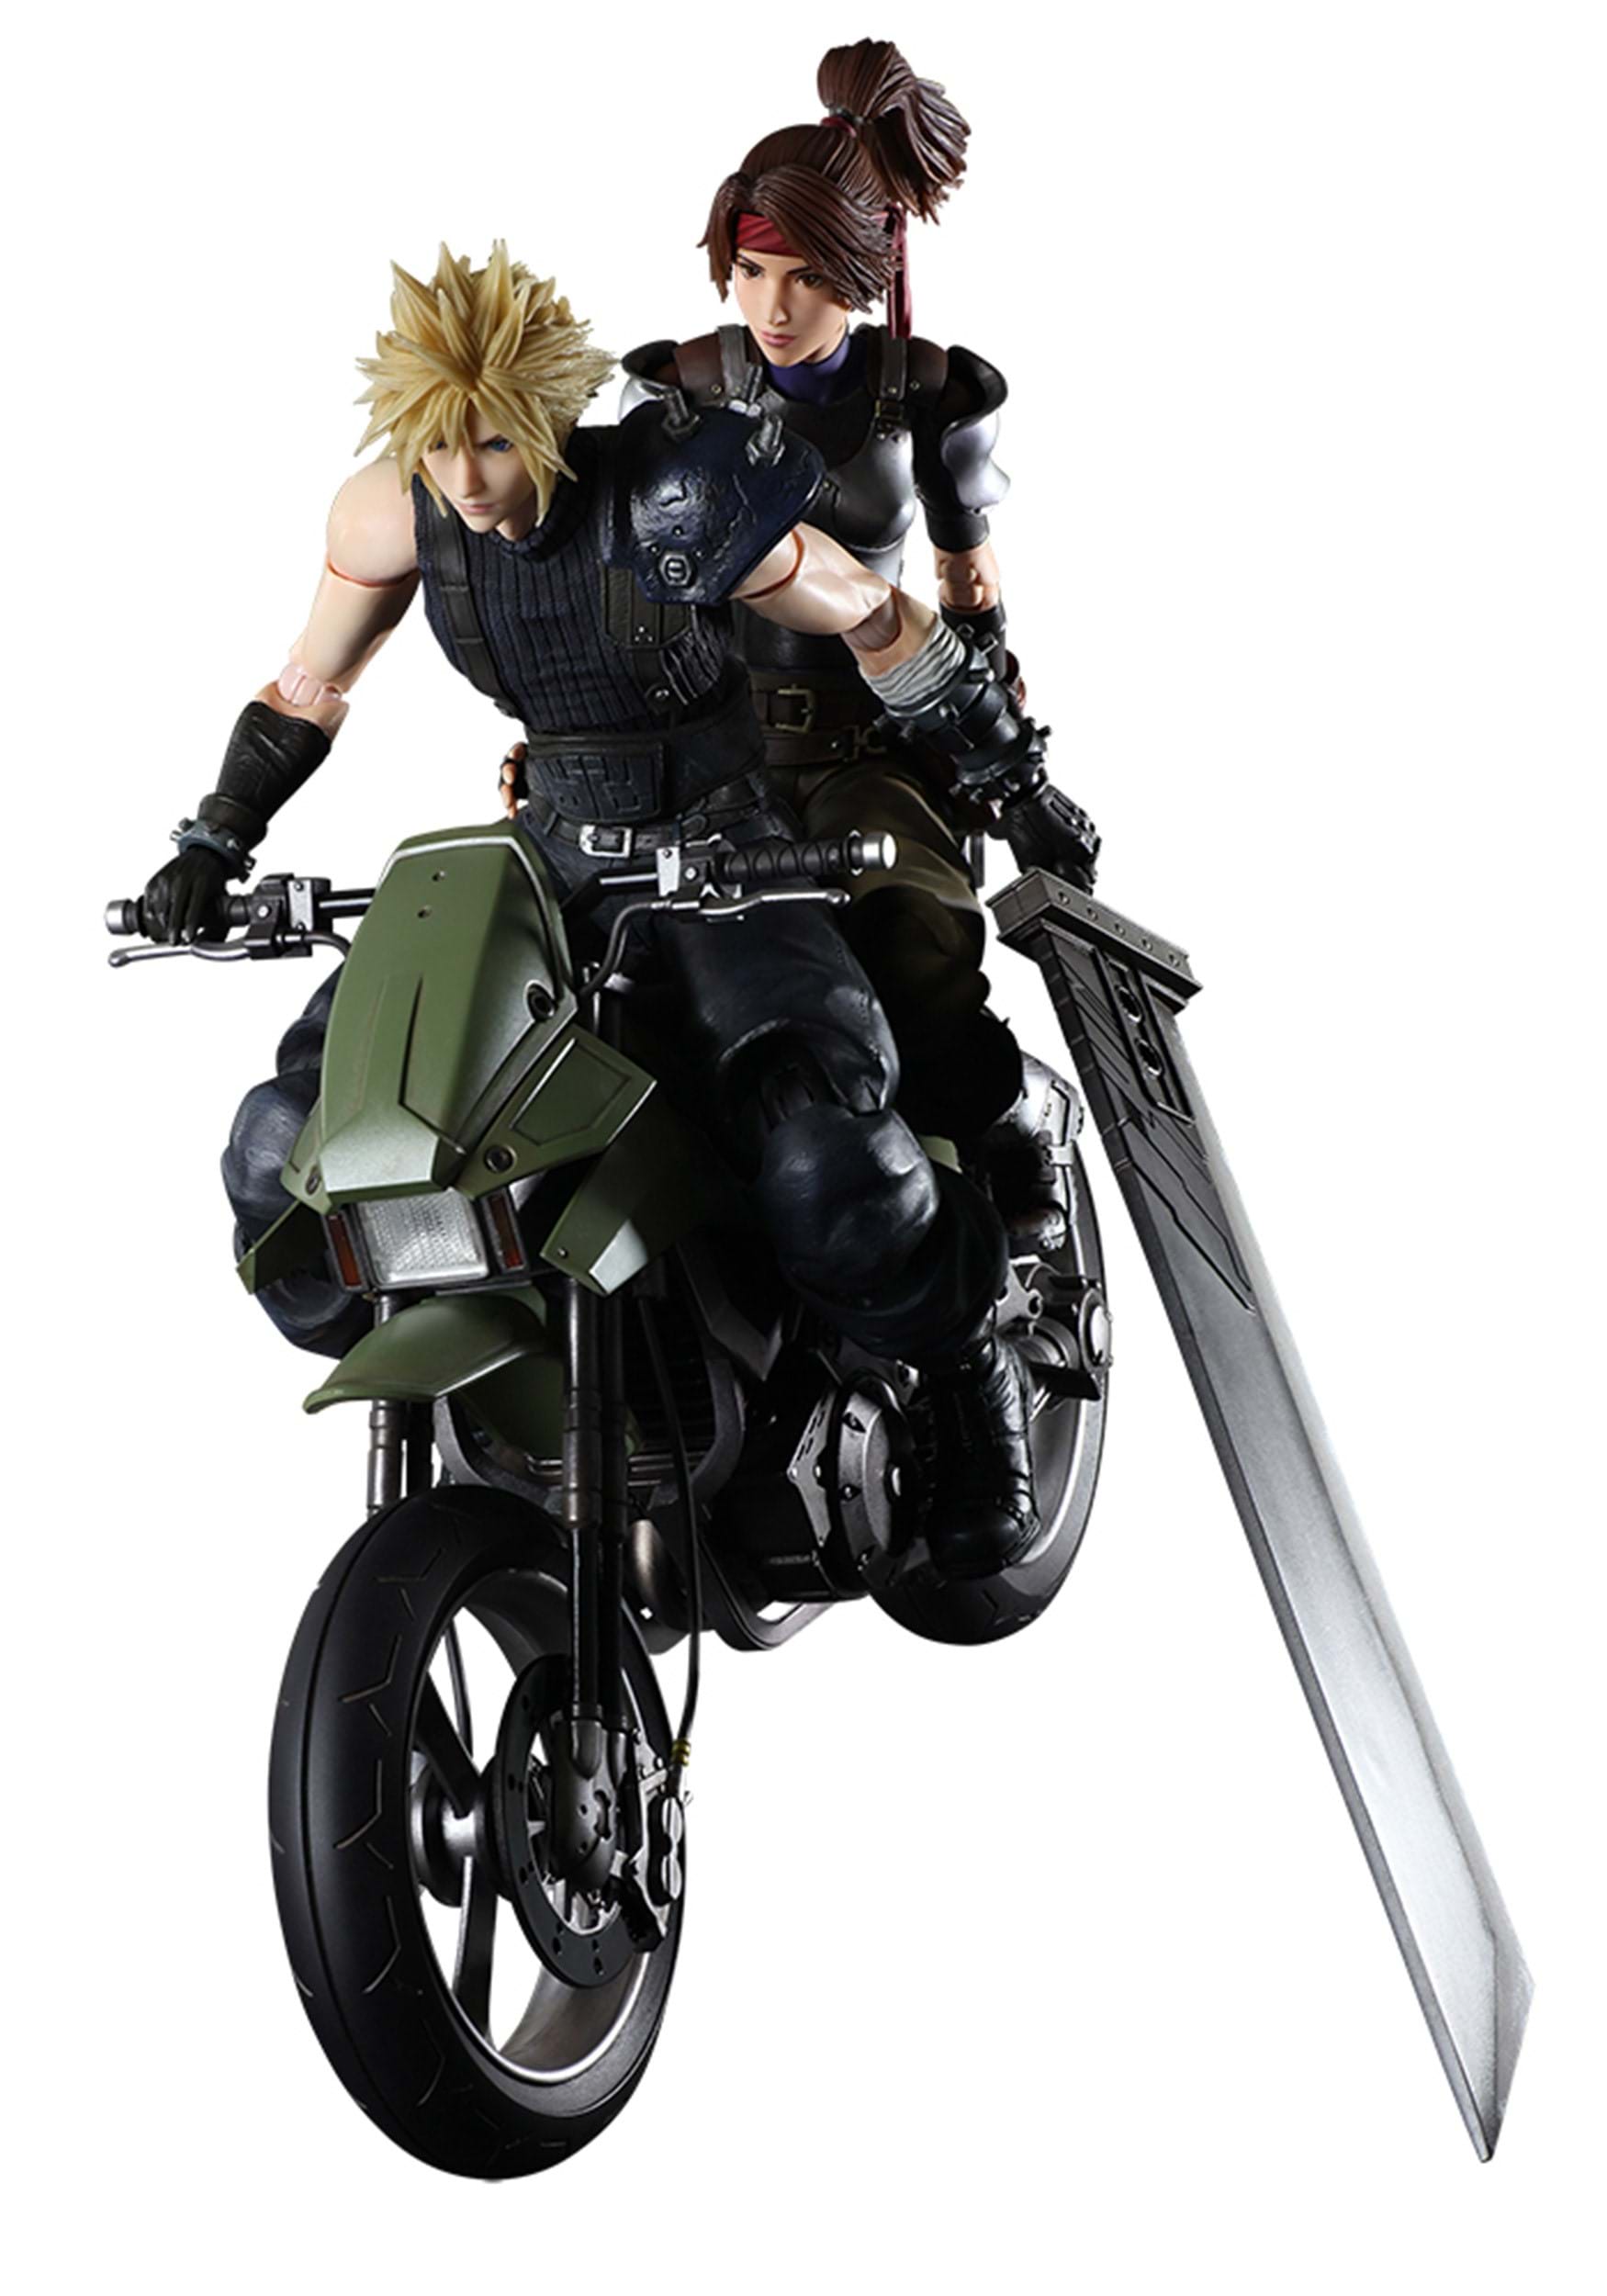 Final Fantasy VIIR Jessie Cloud & Motorcycle Set from Play Arts Kai